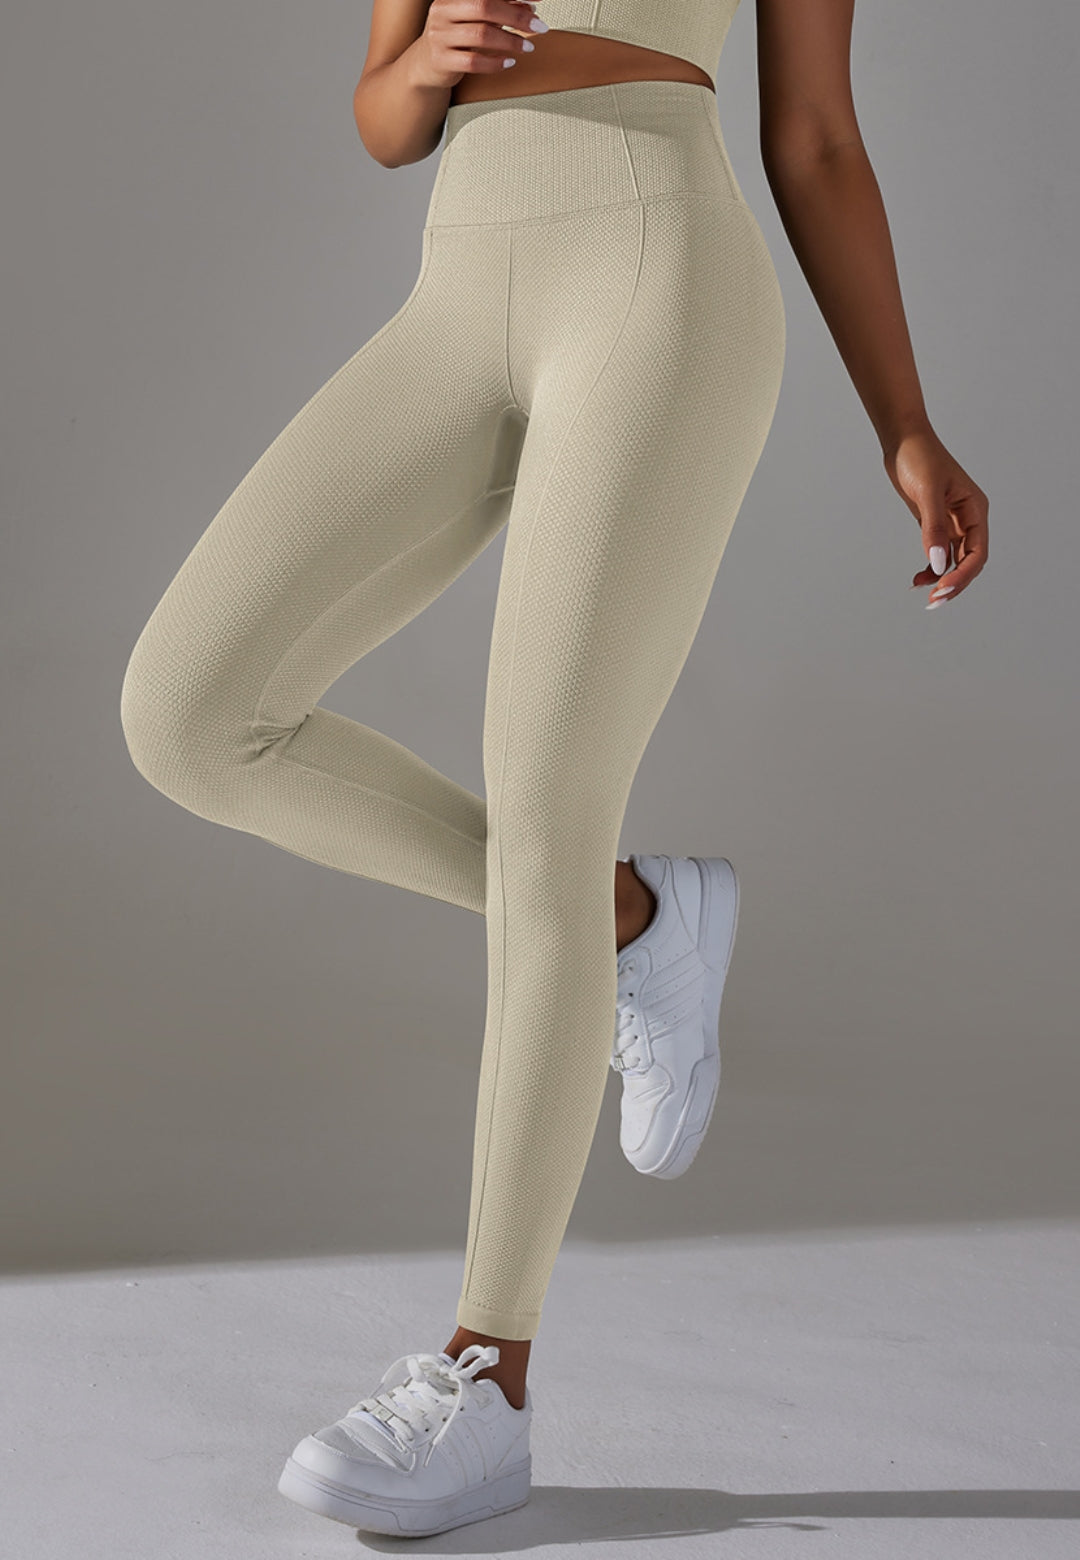 Alphalete Revival R6 Leggings Taupe SMALL  Clothes design, Leggings,  Seamless leggings